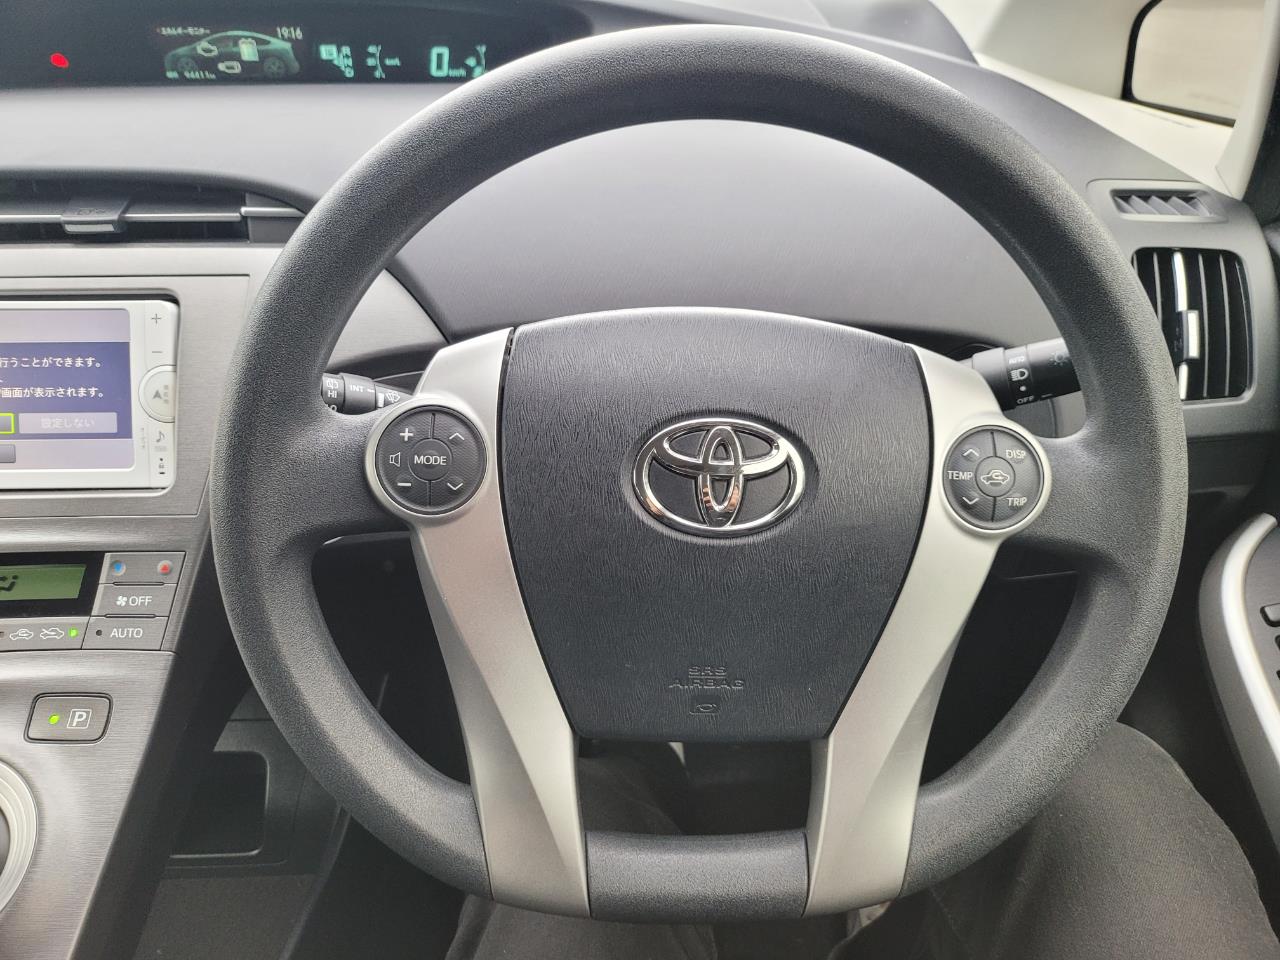 2014 Toyota Prius image 12